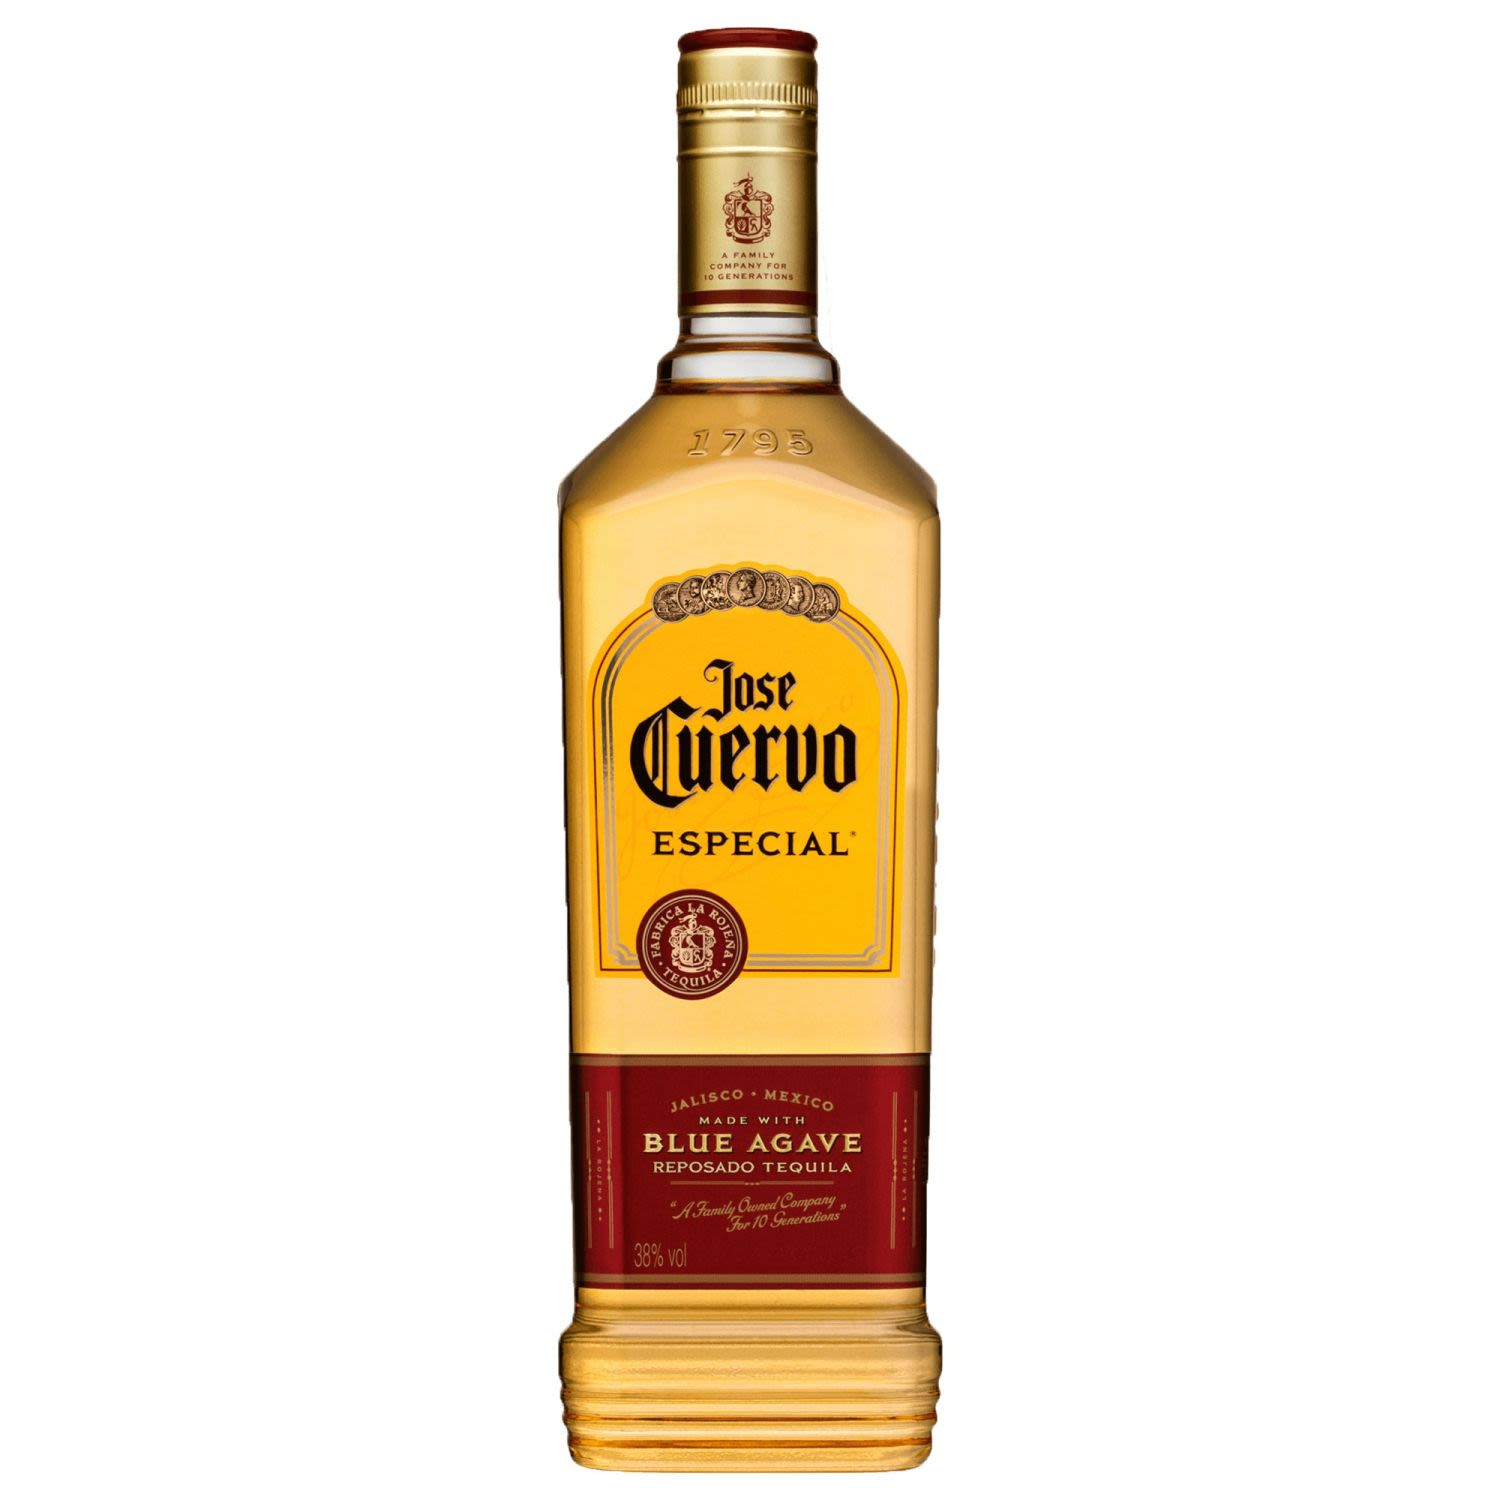 Jose Cuervo Especial Reposado Tequila 1L Bottle